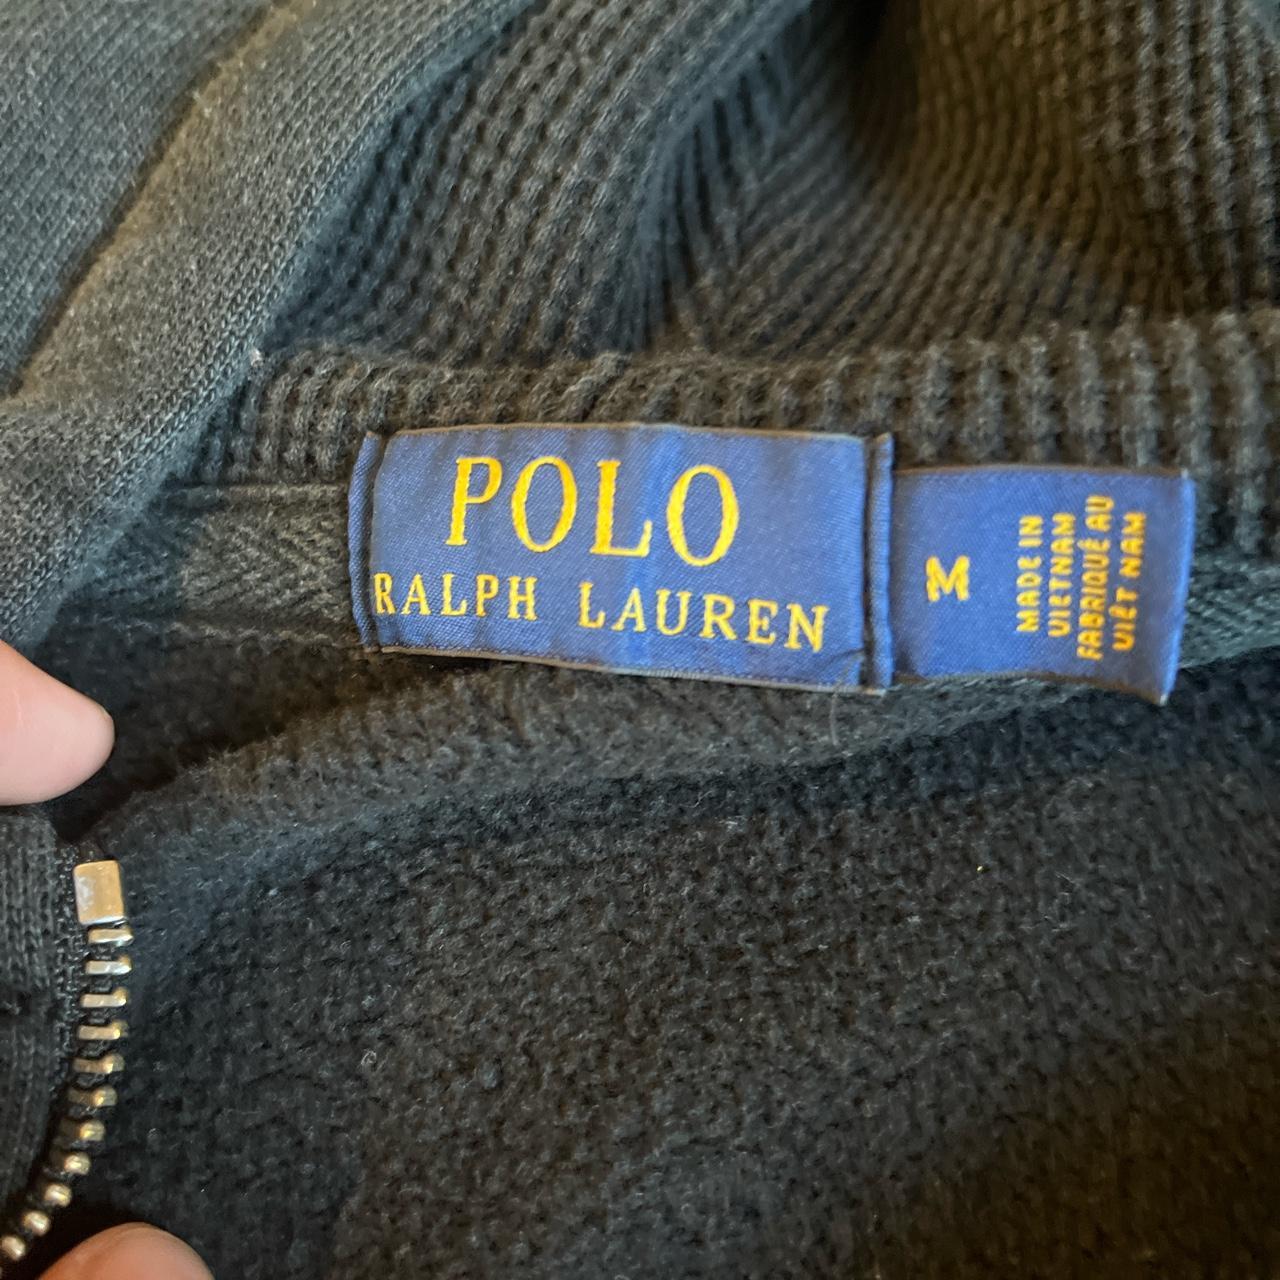 Ralph Lauren Polo. good condition ,black fading - Depop